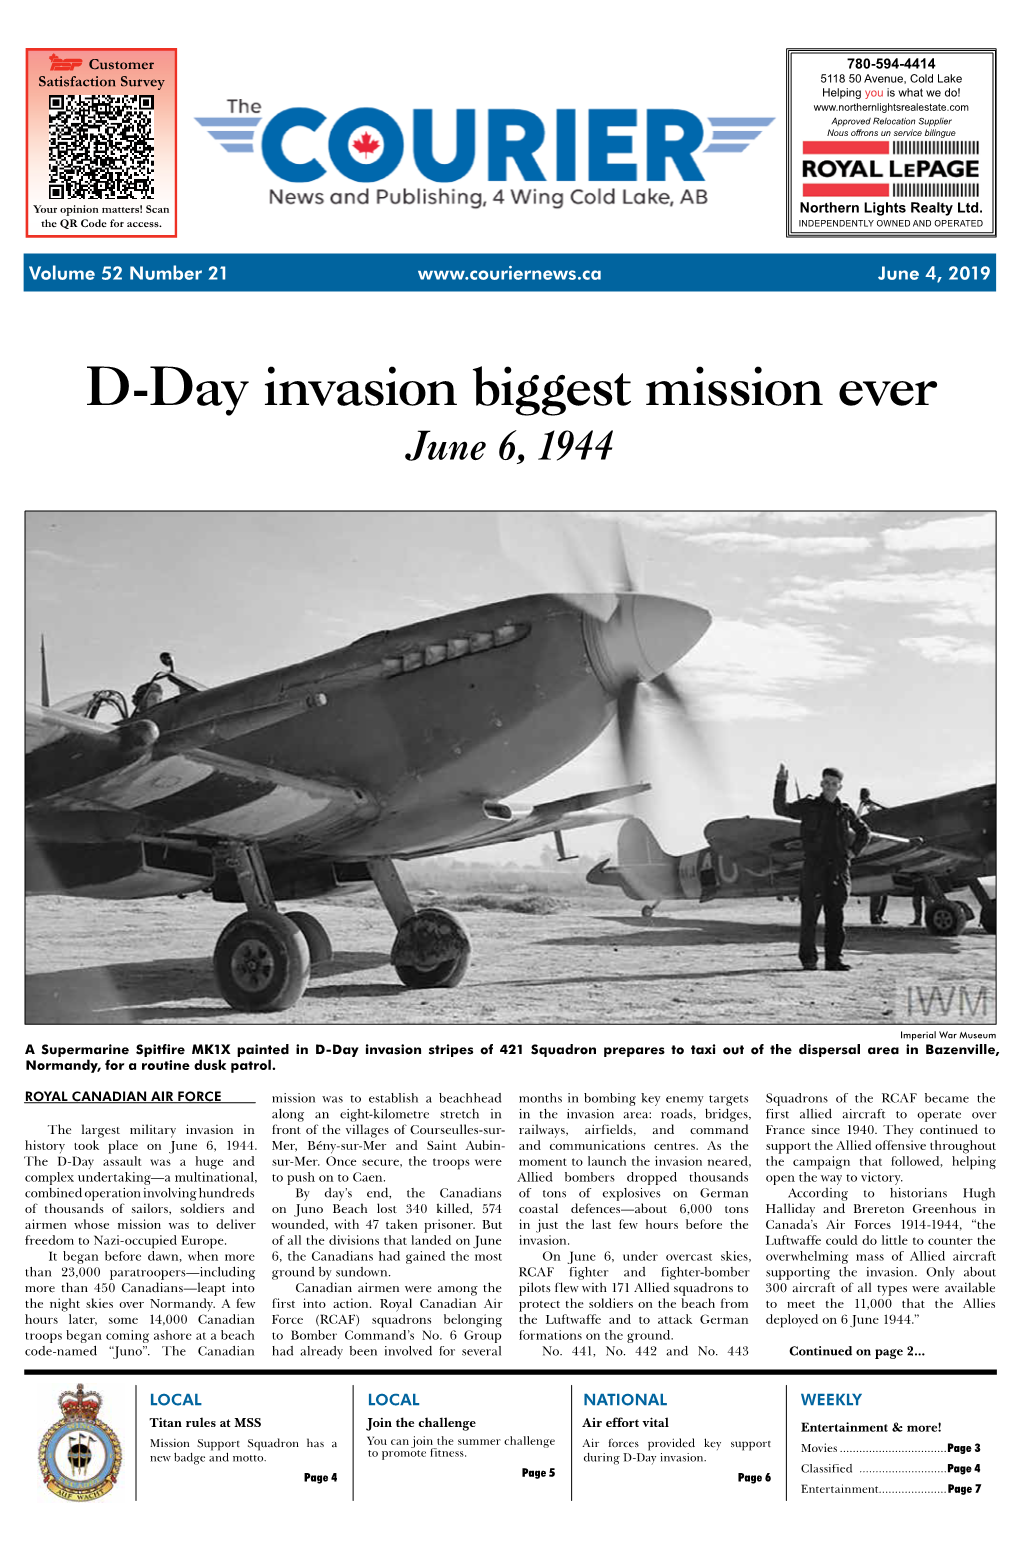 D-Day Invasion Biggest Mission Ever June 6, 1944